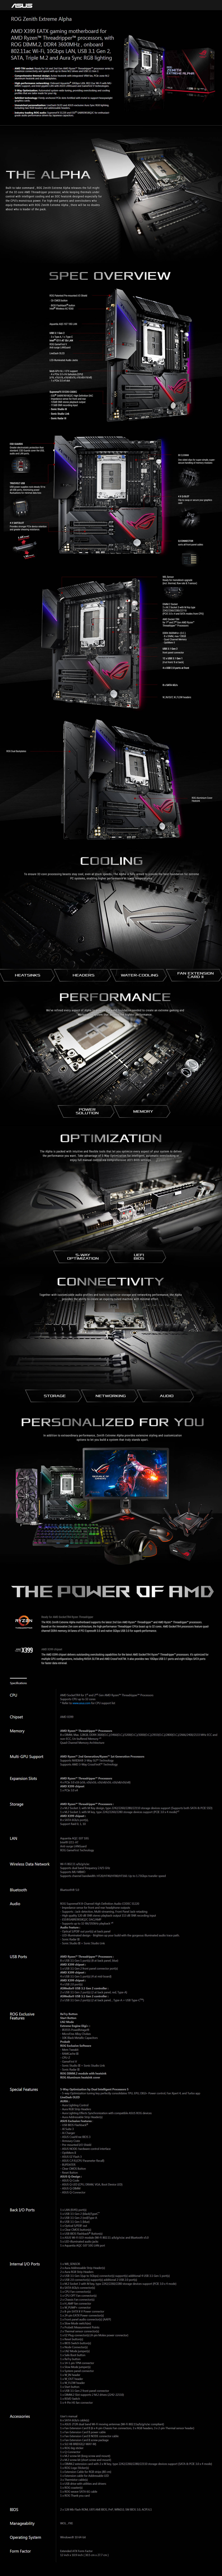 Buy Online Asus ROG Zenith-Extreme-Alpha AMD Motherboard